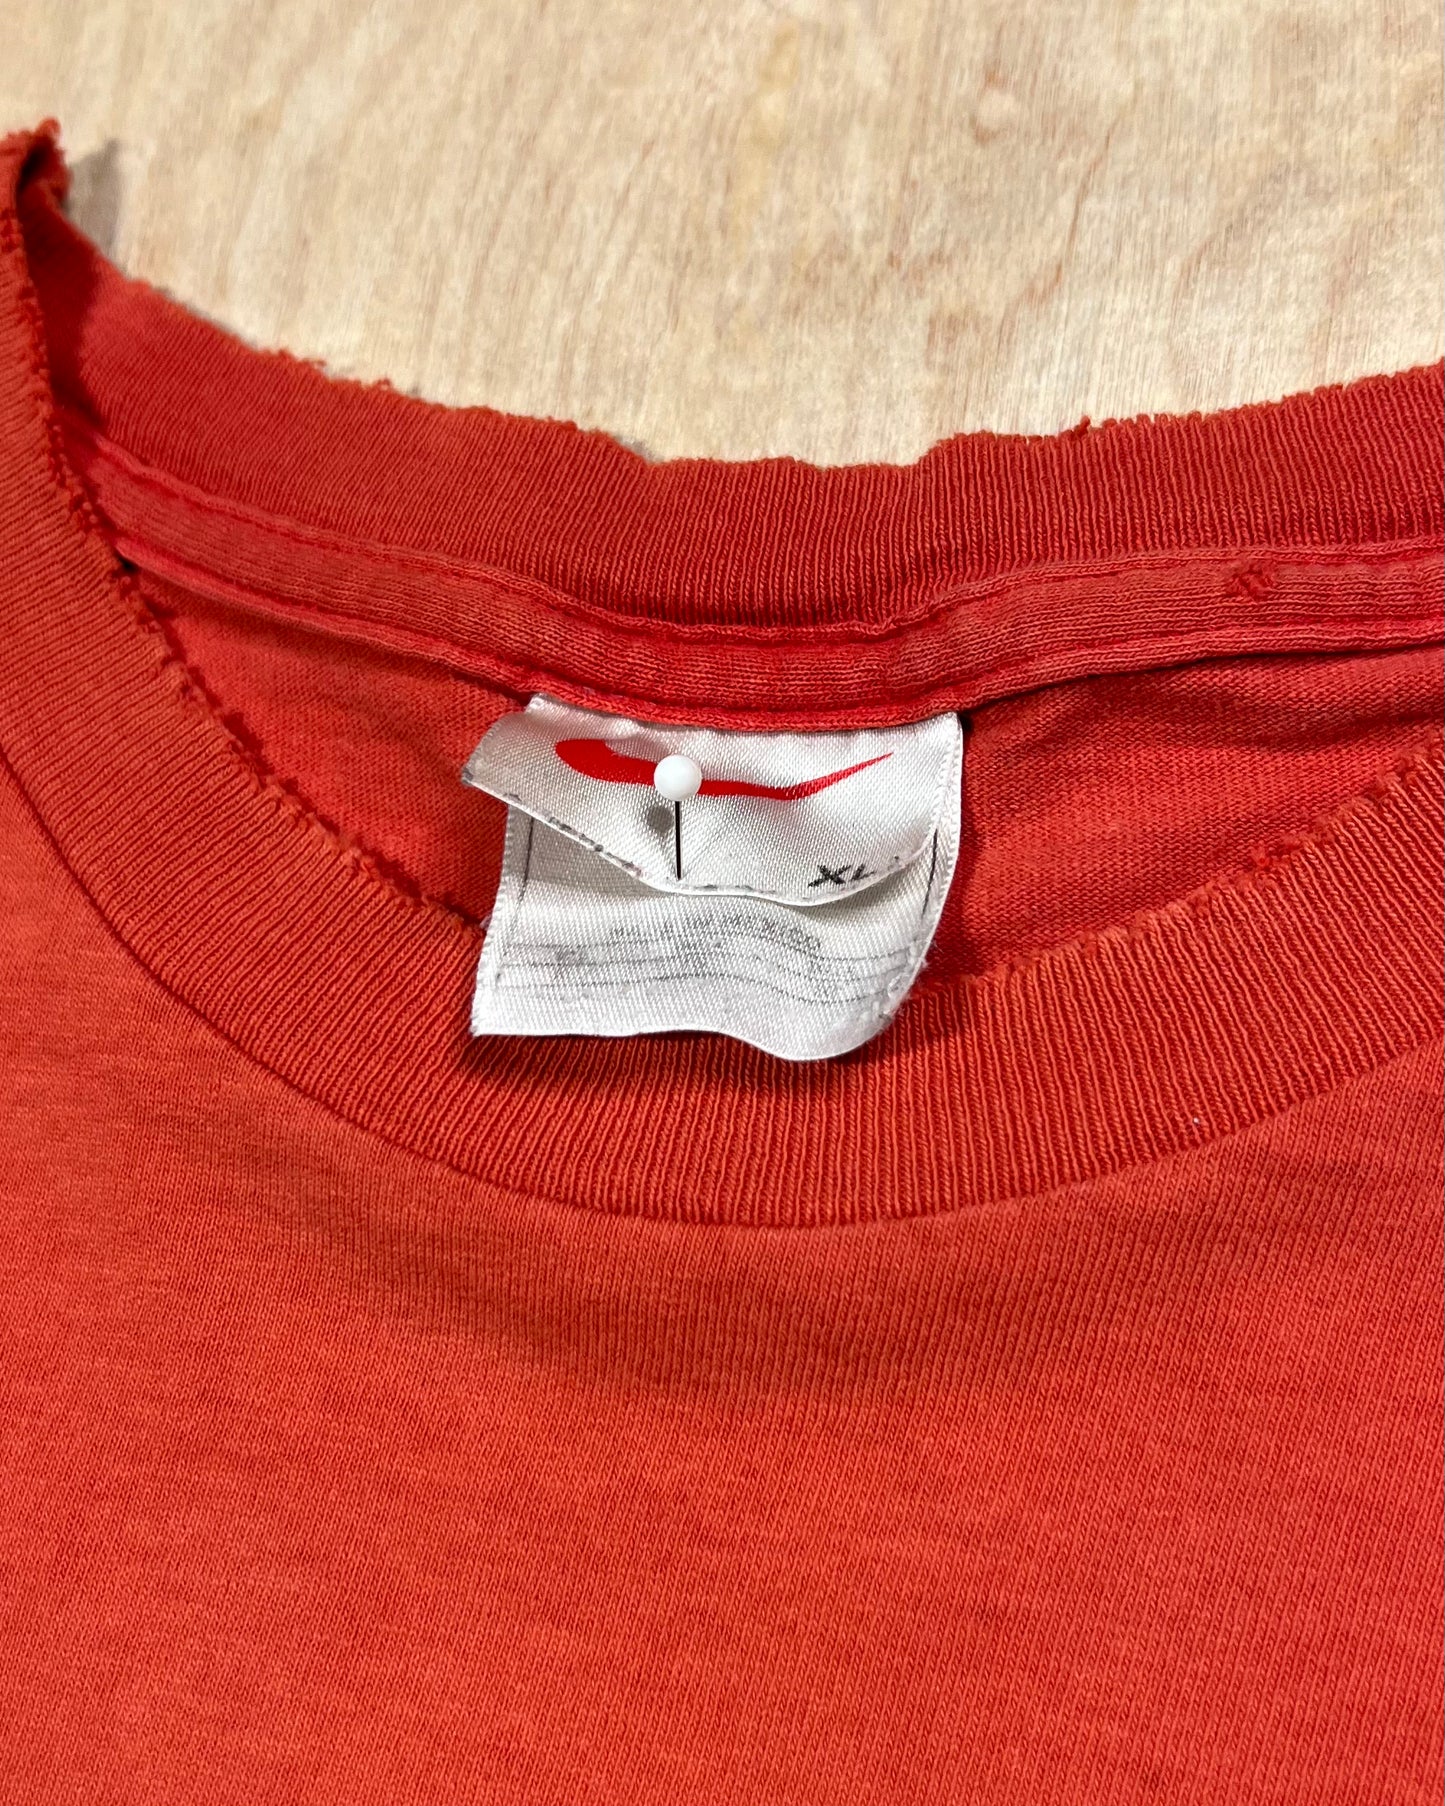 1990's Distressed Nike Mini Swoosh T-Shirt